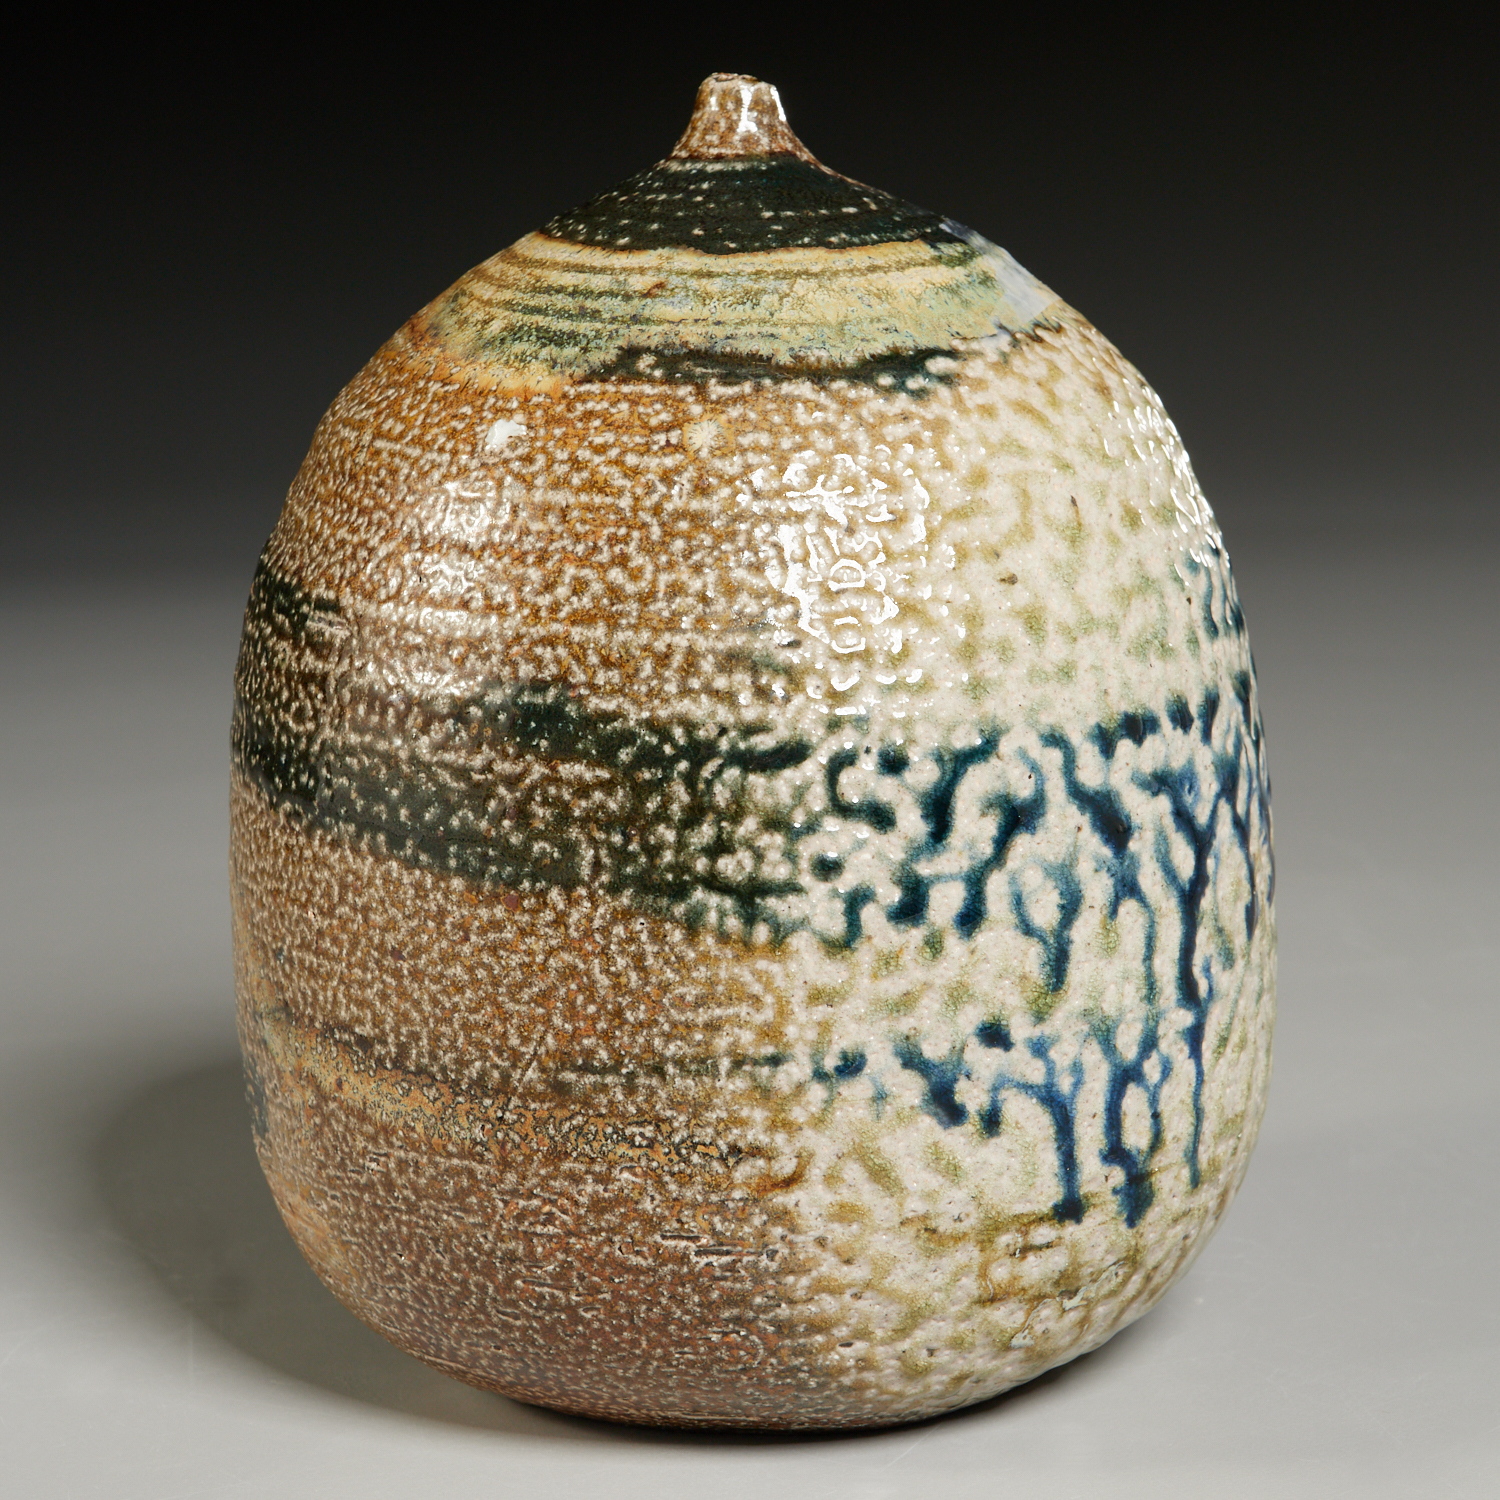 Toshiko Takaezu, ceramic Moonpot | Millea Brothers